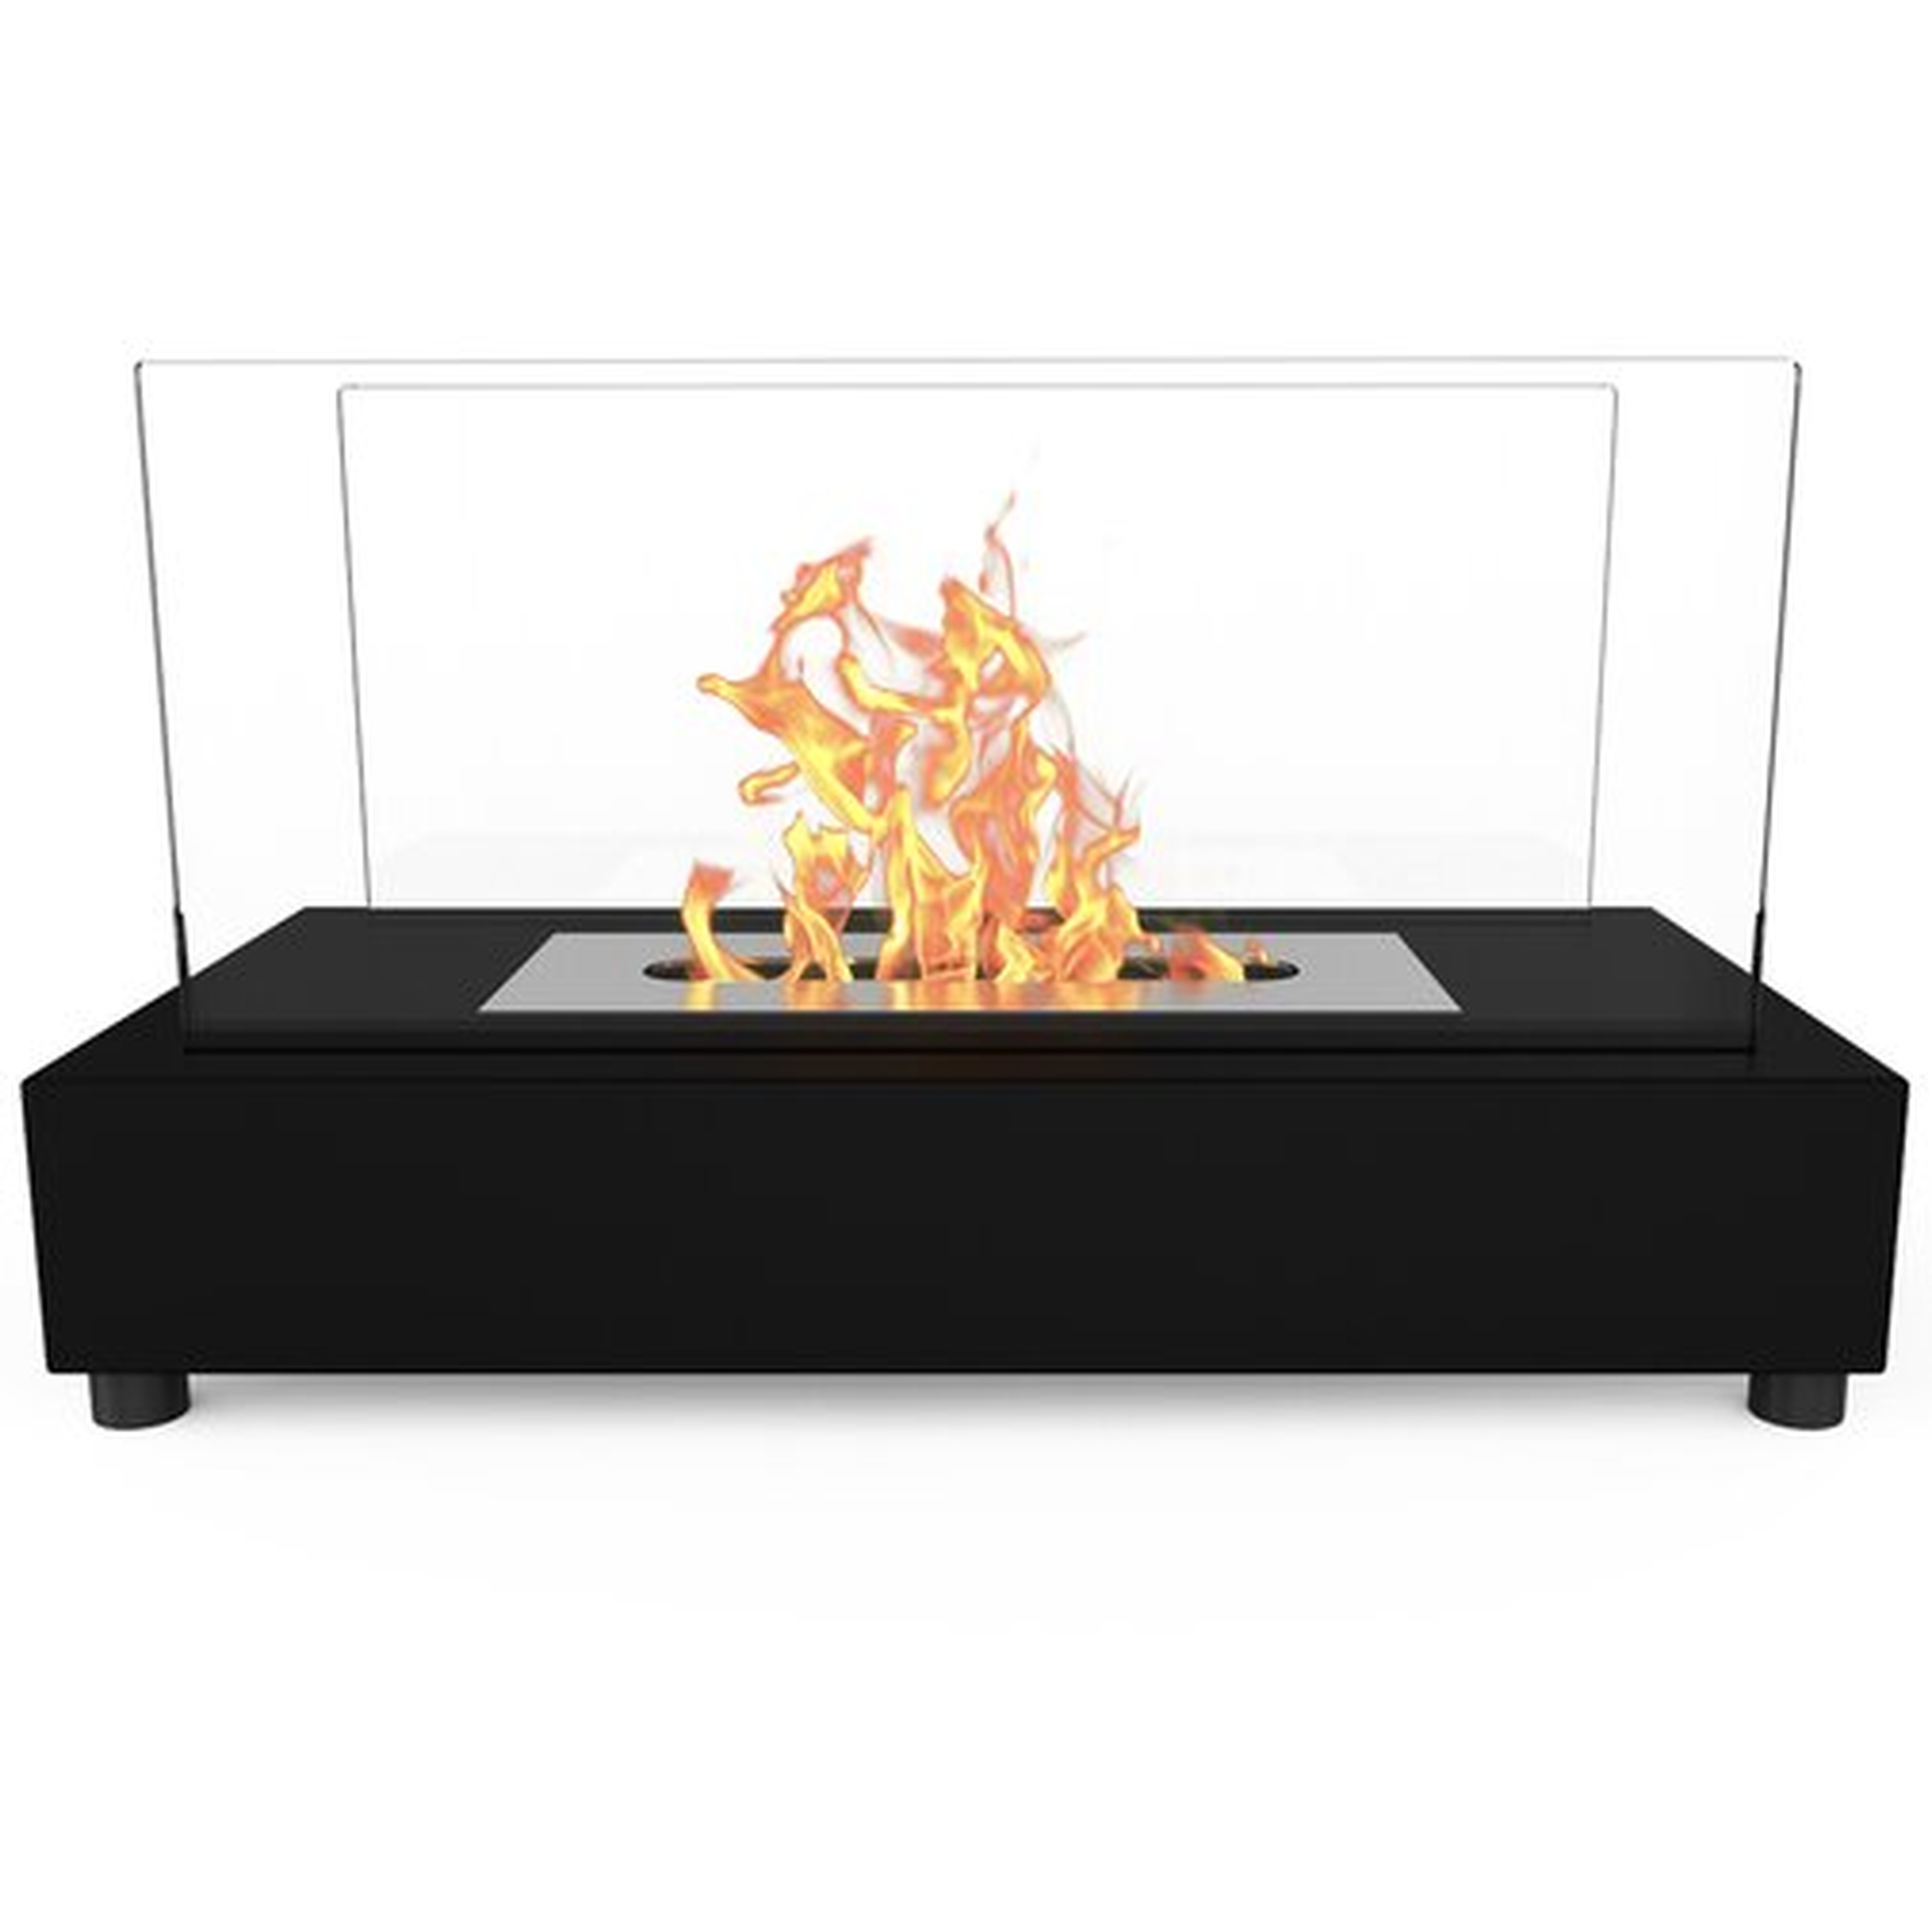 Avon Portable Bio Ethanol Tabletop Fireplace - Wayfair